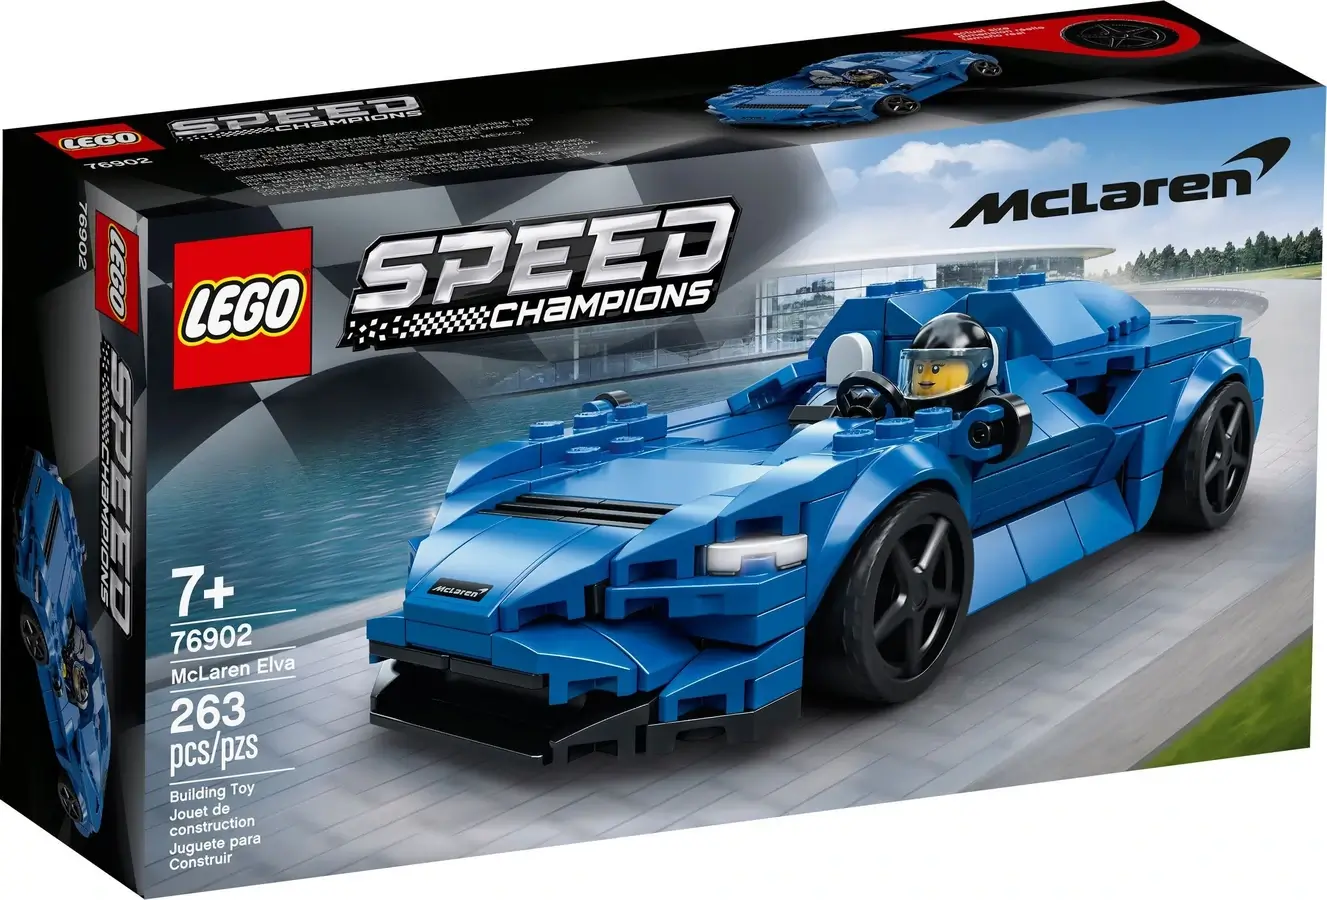 Pudełko zestawu 76902 z serii LEGO® Speed Champions – McLaren Elva